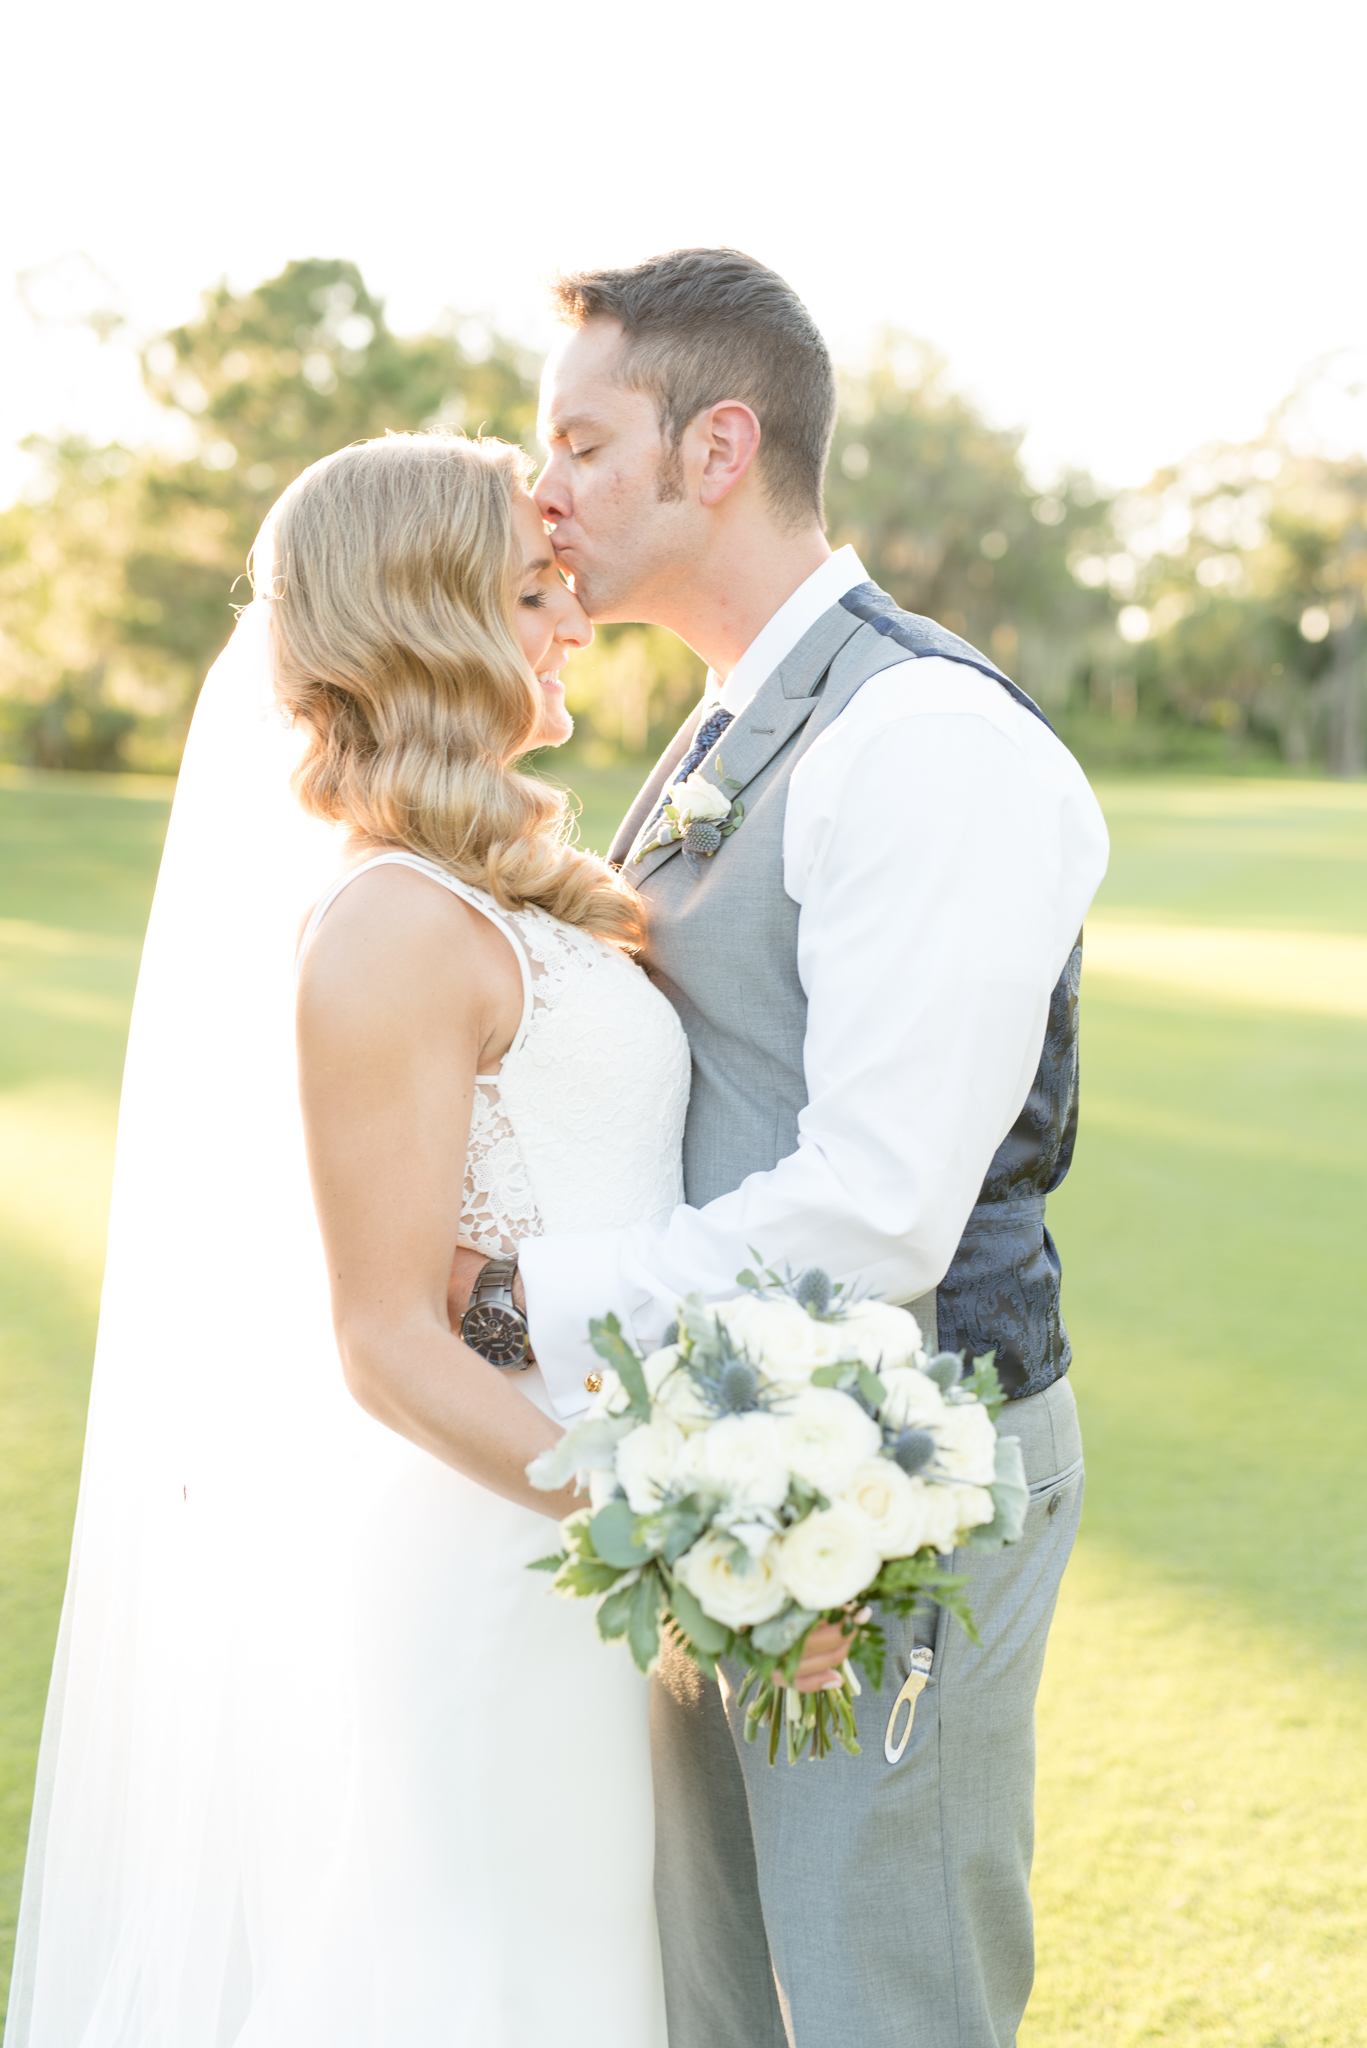 Groom kisses bride on forehead in field.